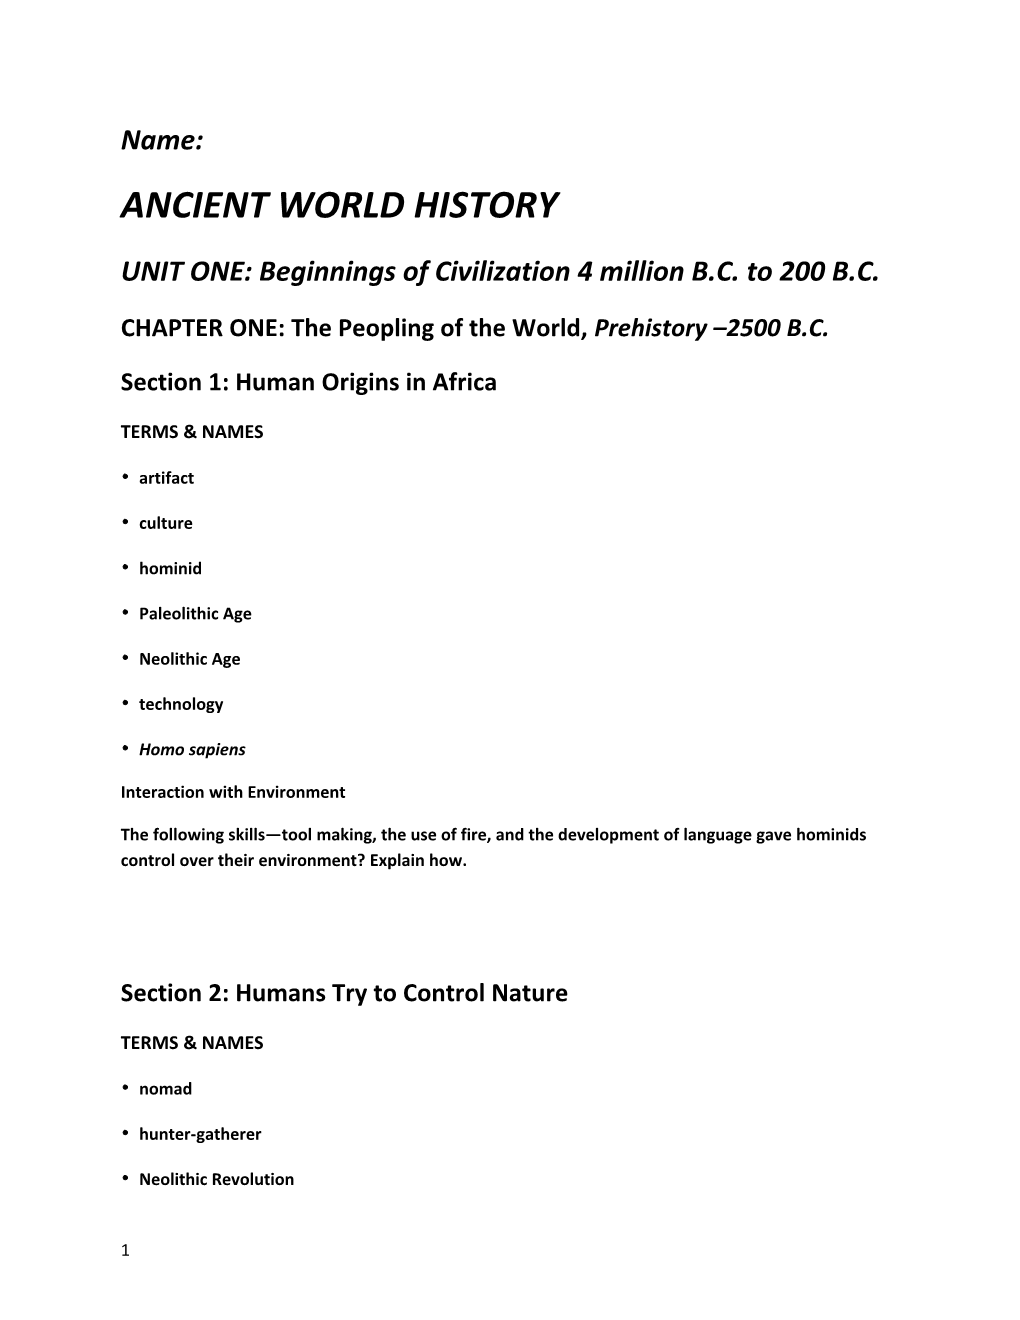 UNIT ONE: Beginnings of Civilization 4 Million B.C. to 200 B.C